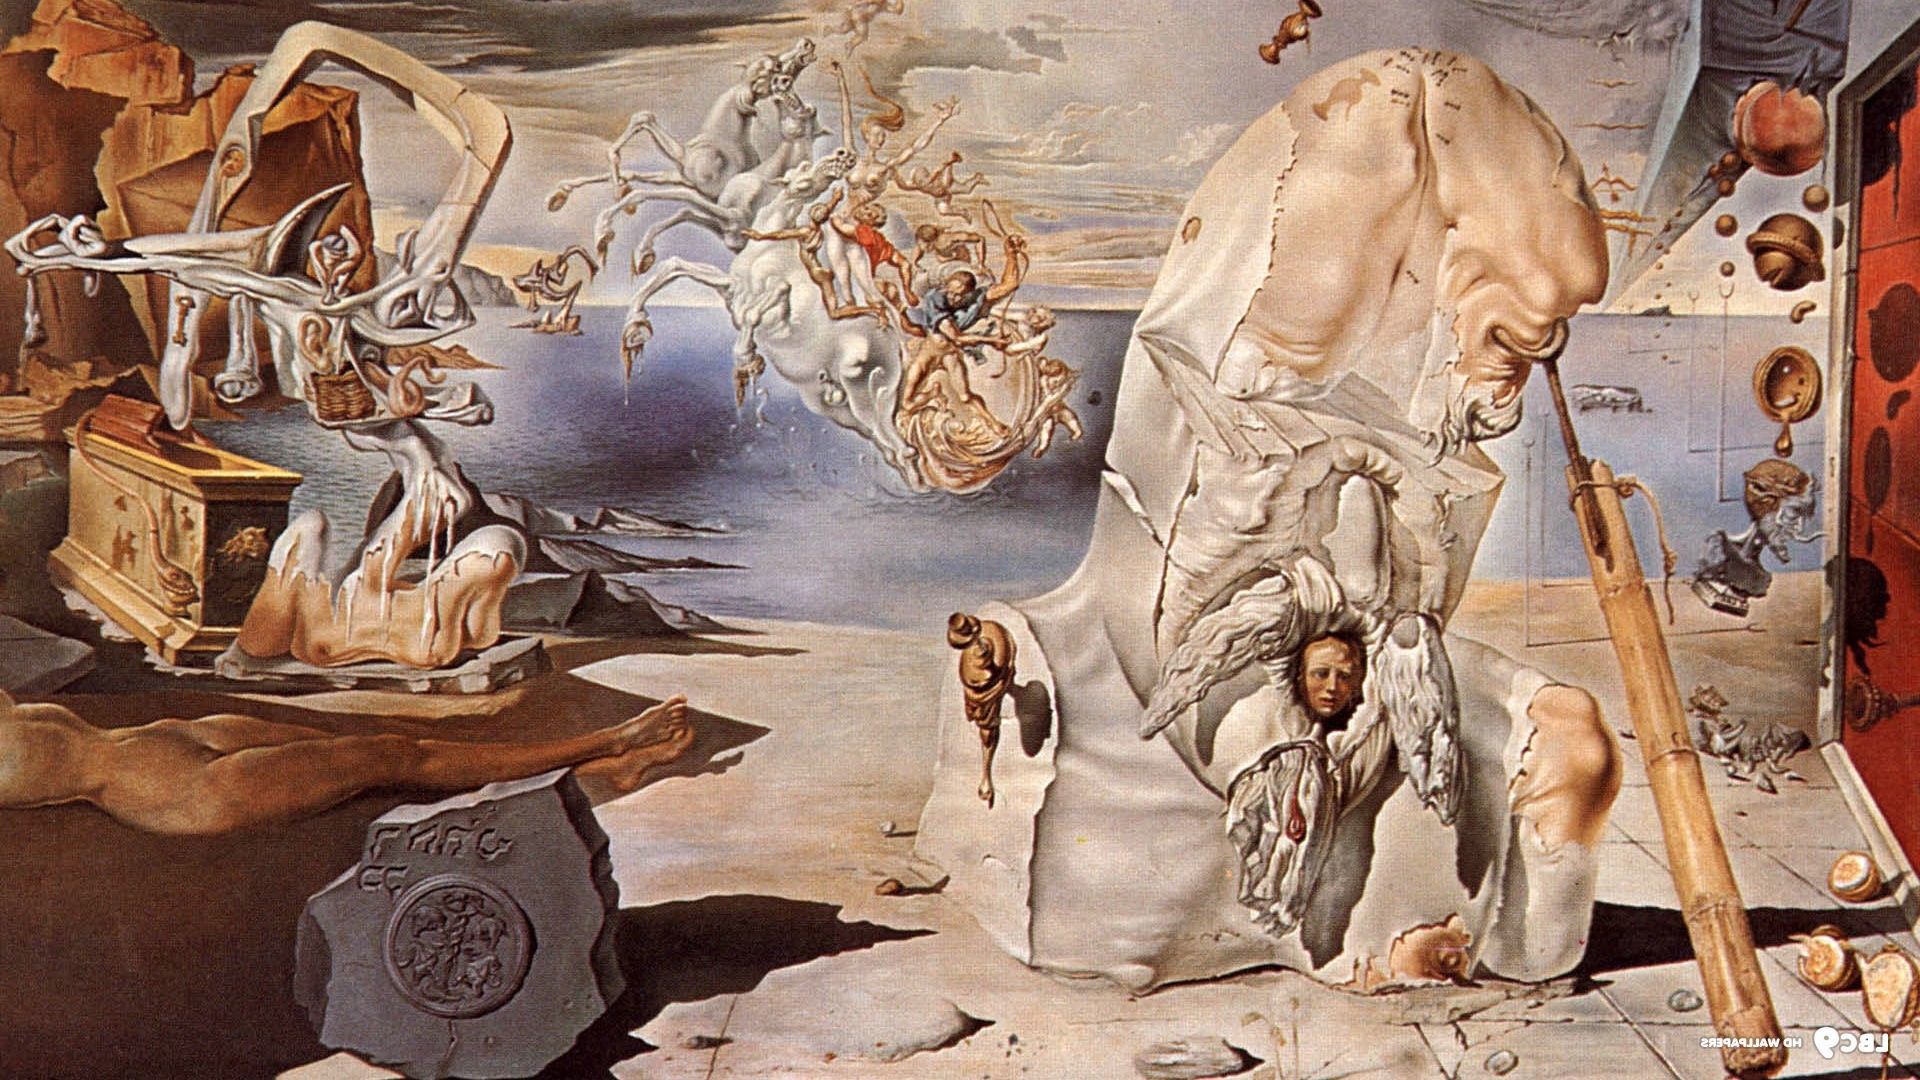 Fondos de pantalla de Dalí - FondosMil